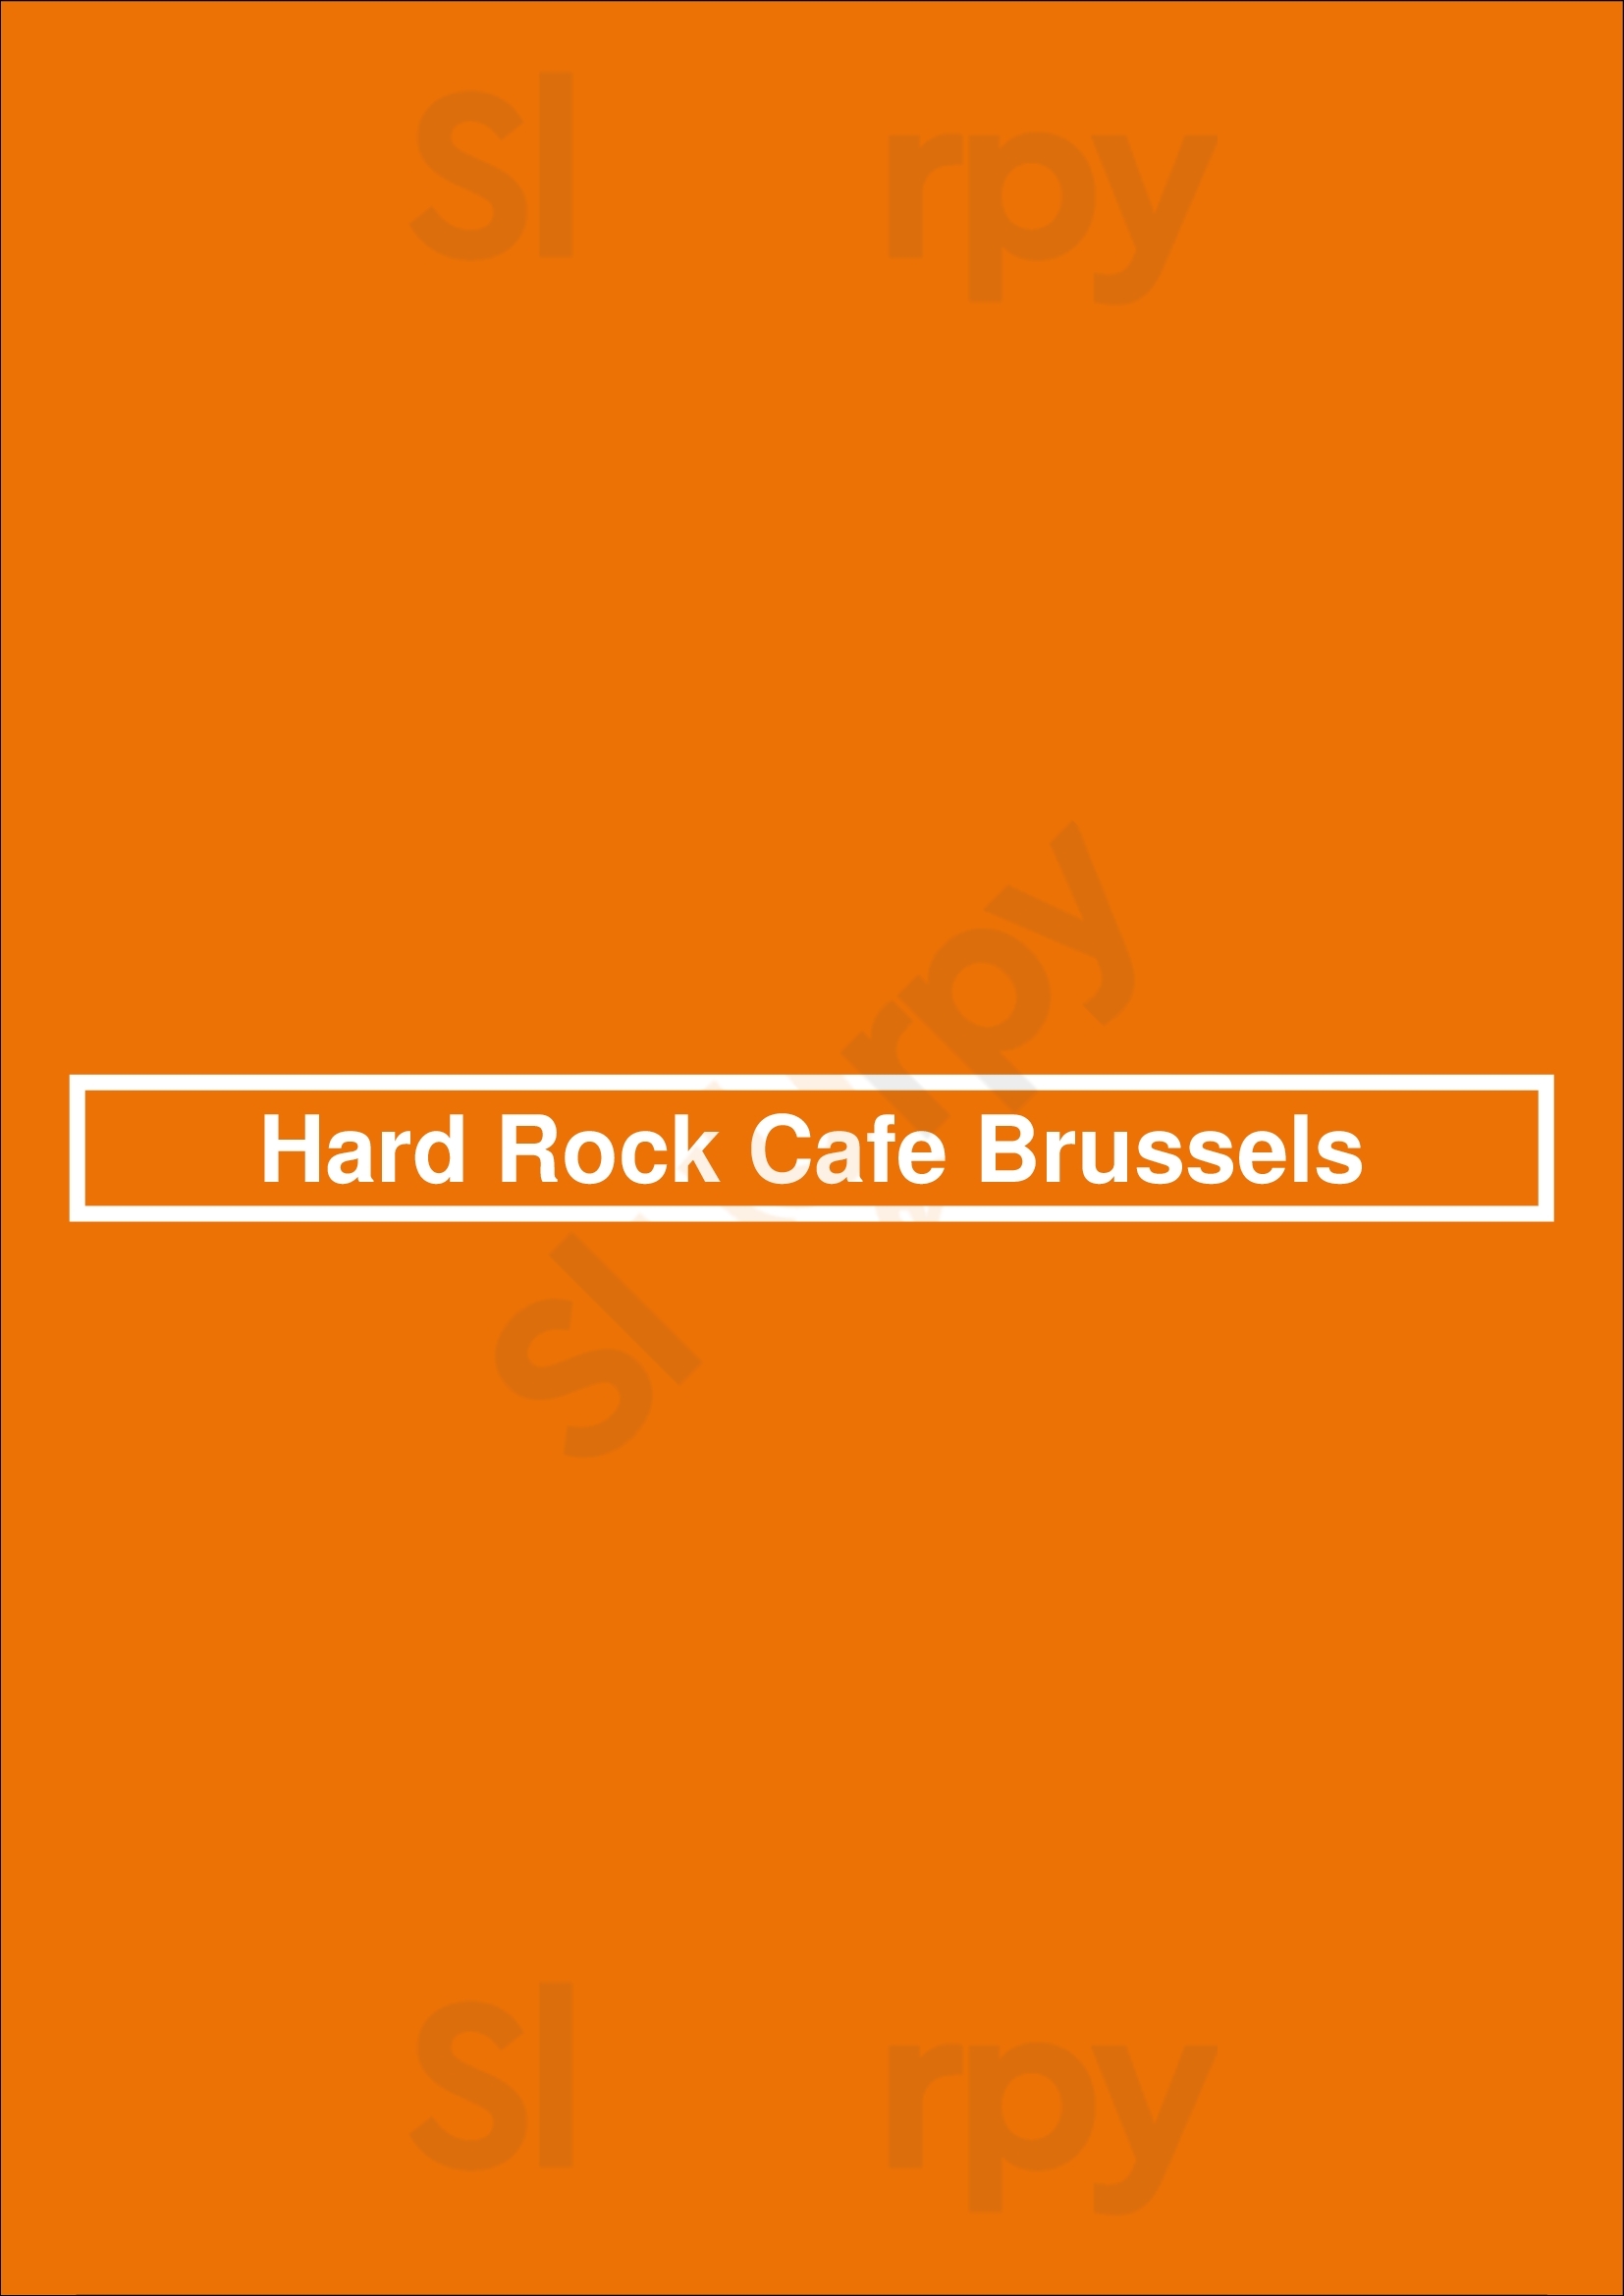 Hard Rock Cafe Brussels Bruxelles Menu - 1